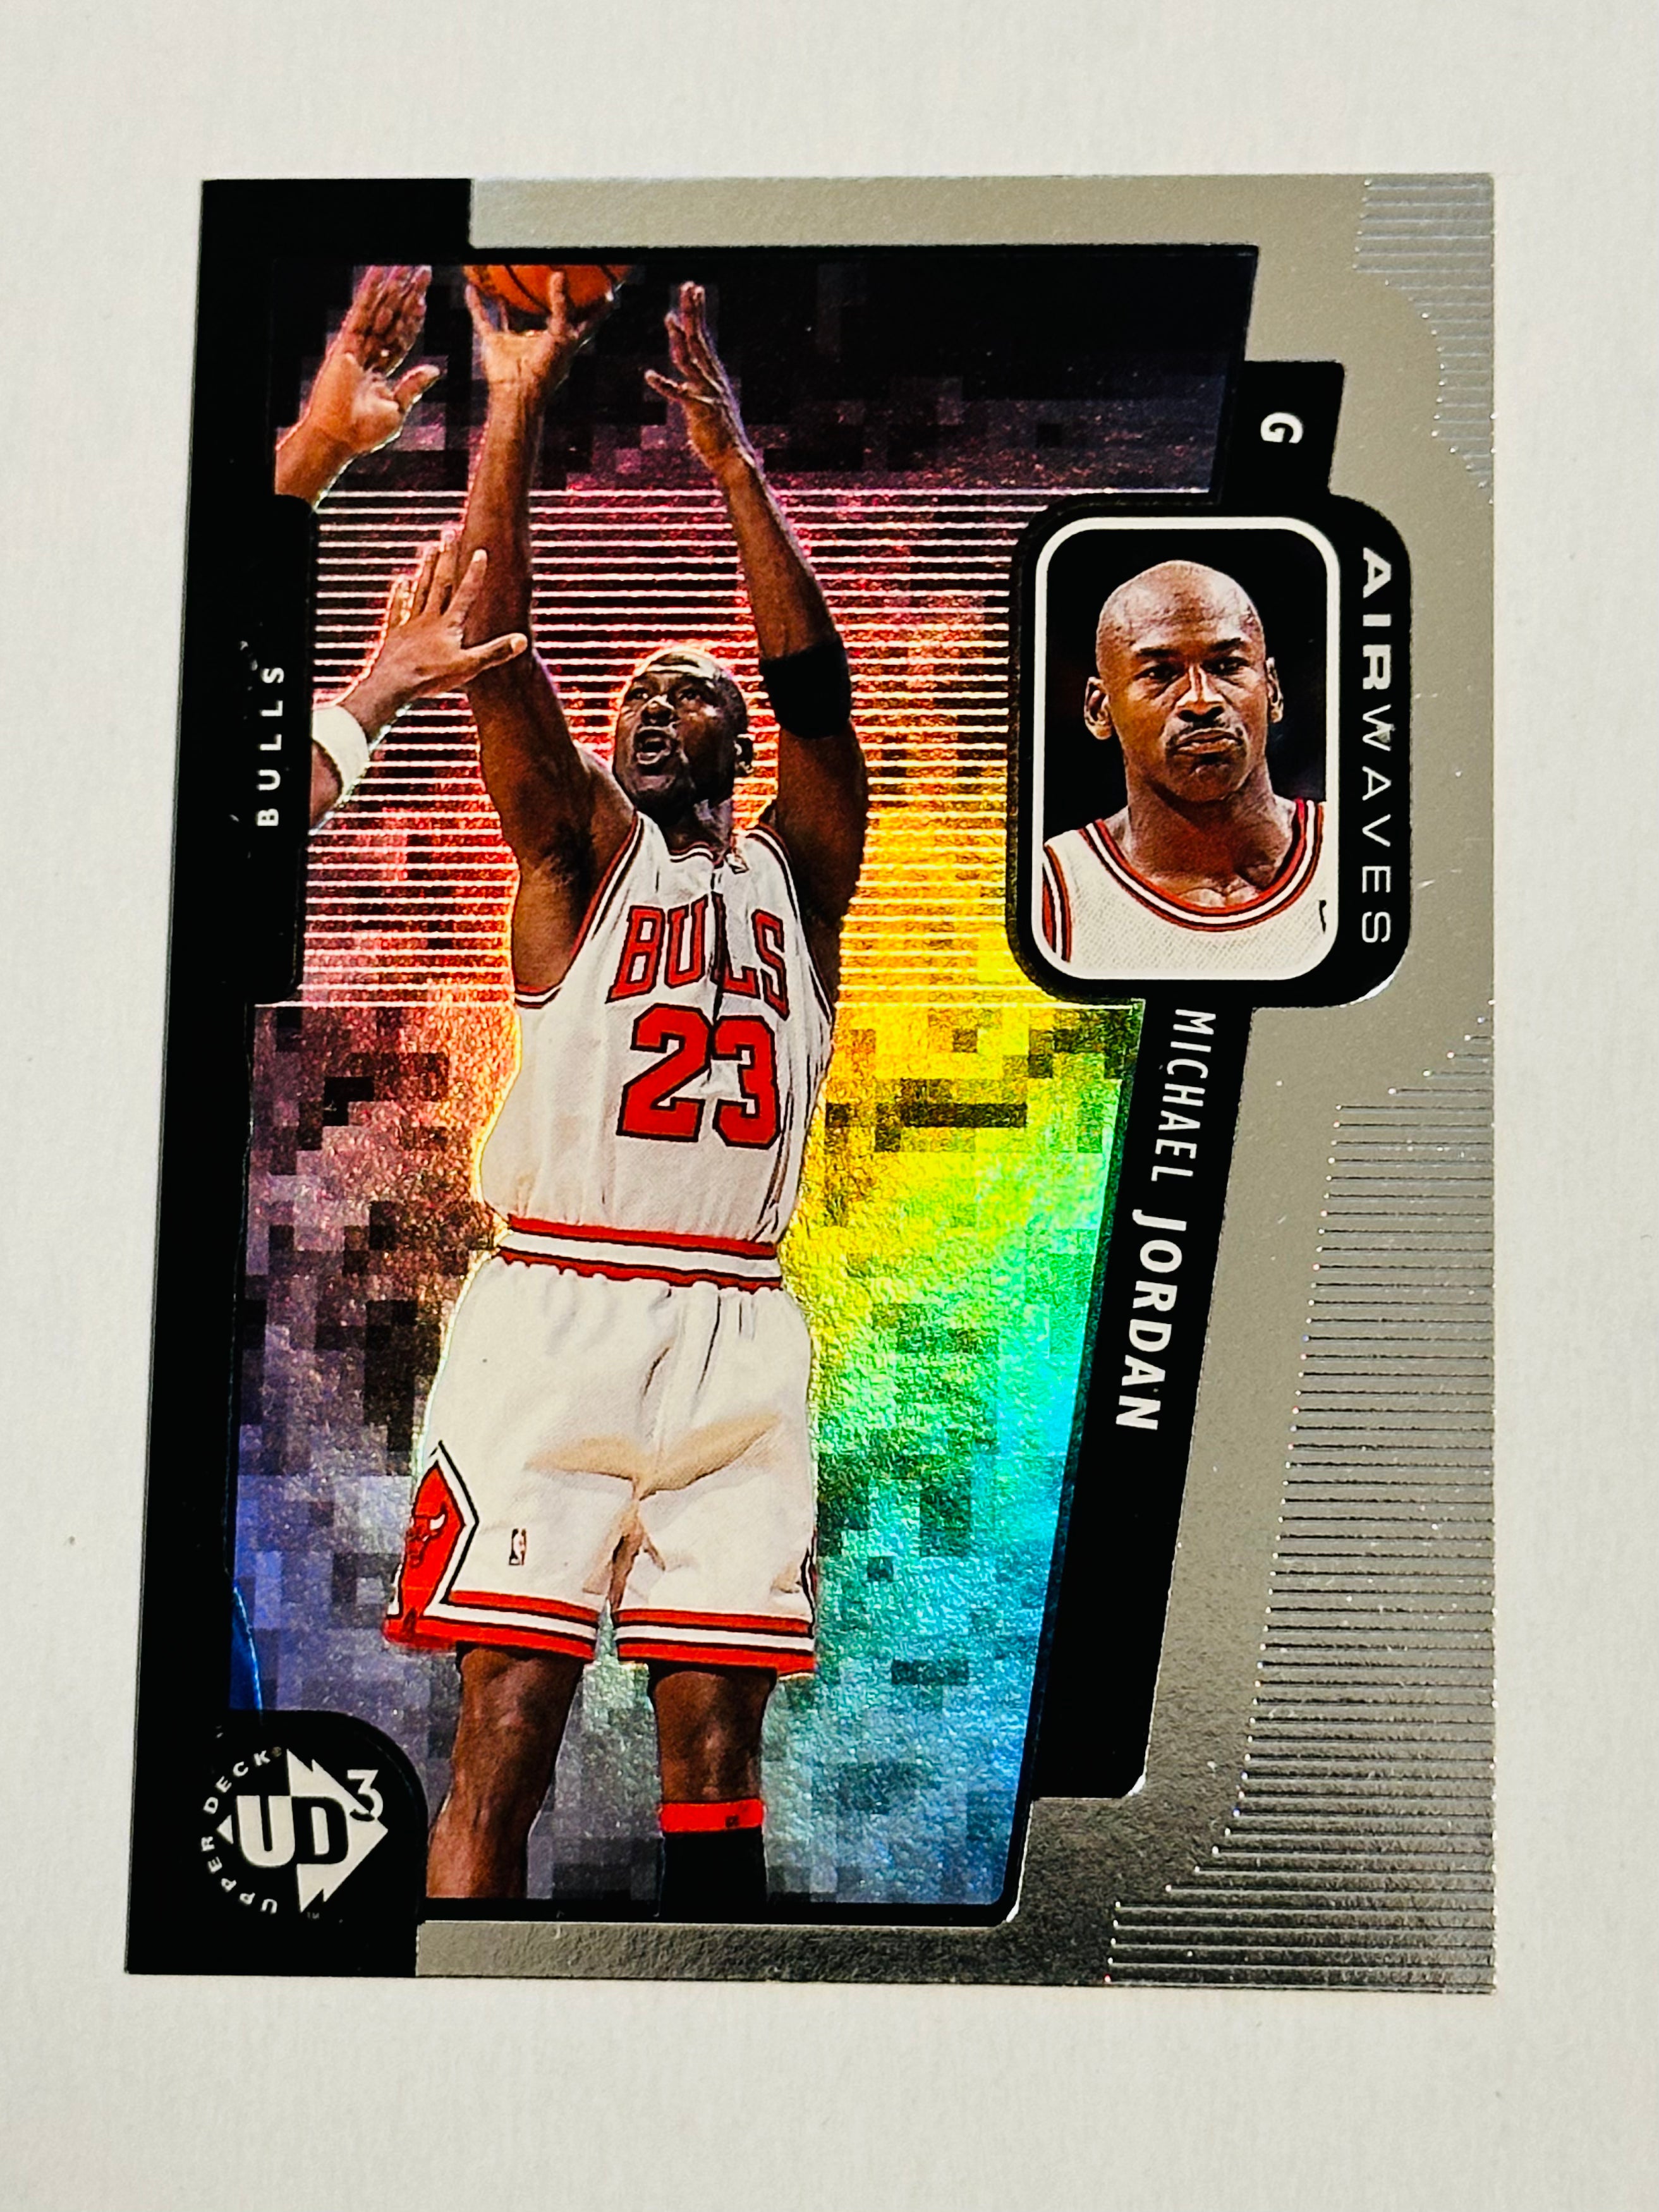 Michael Jordan UD3 Upper Deck rare sample #000 high grade condition foil basketball card 1998